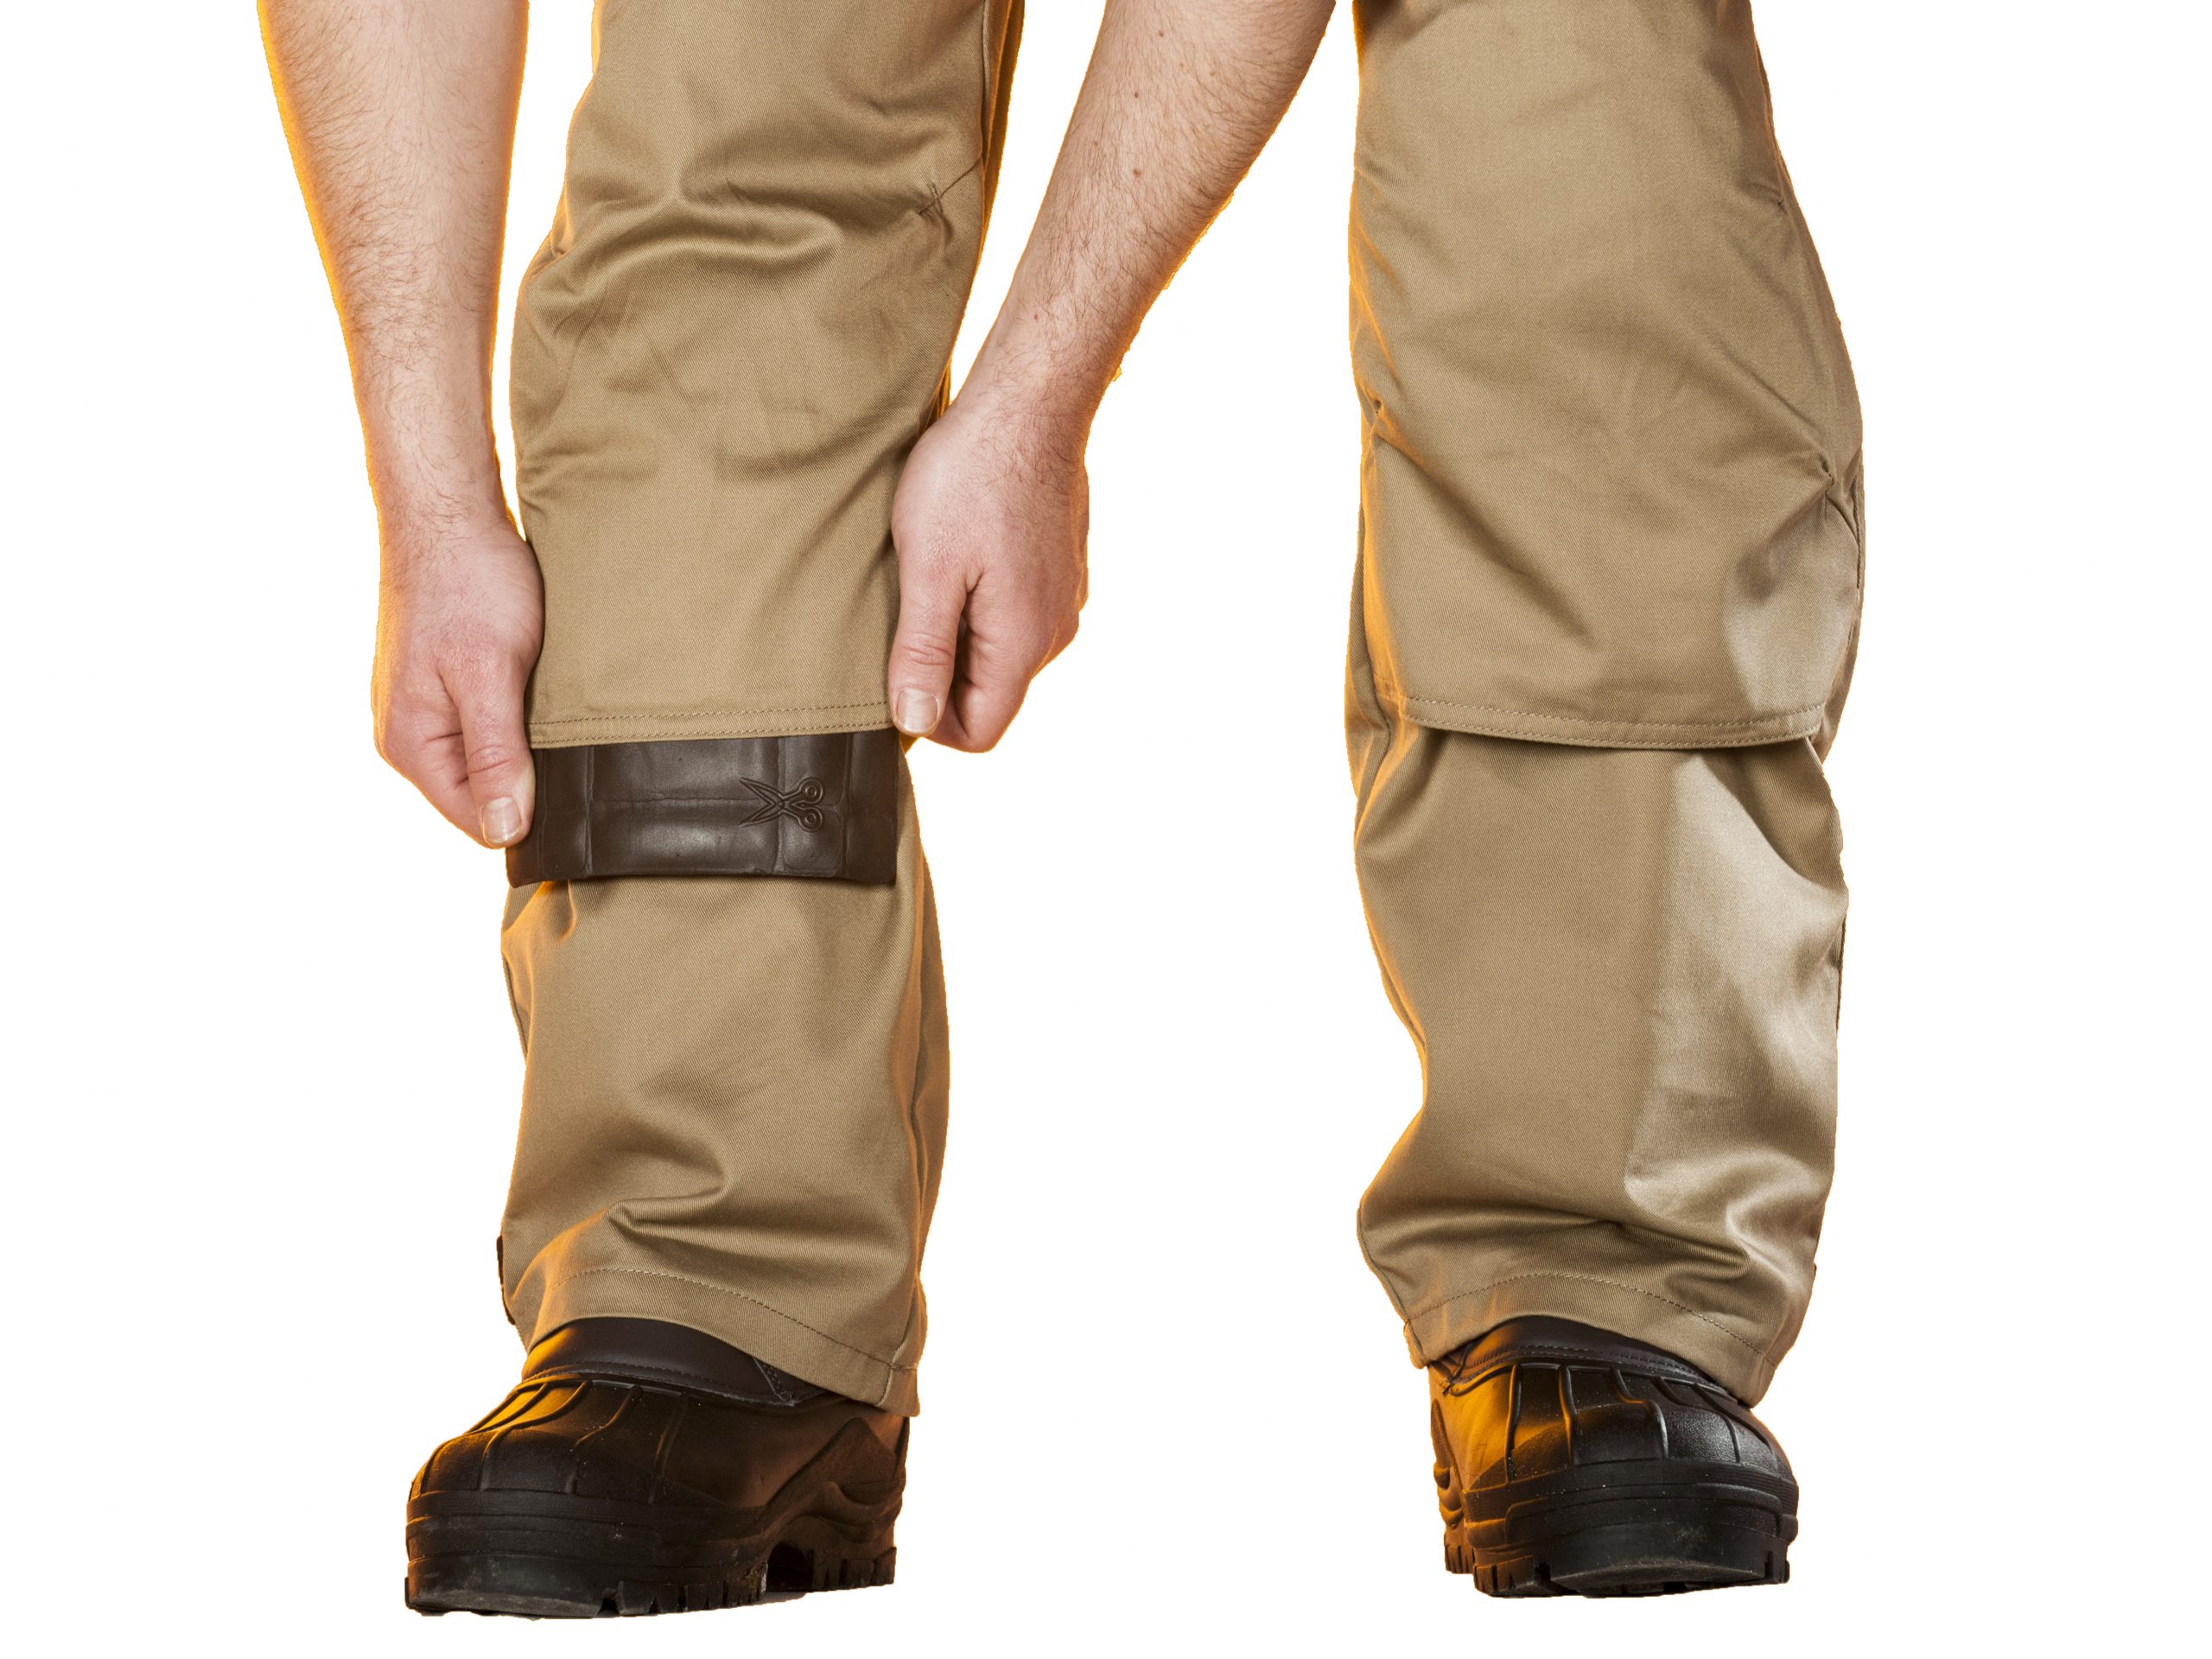 Blackrock Eva Foam Knee Pads Workwear Protection Trousers Pants for sale online 